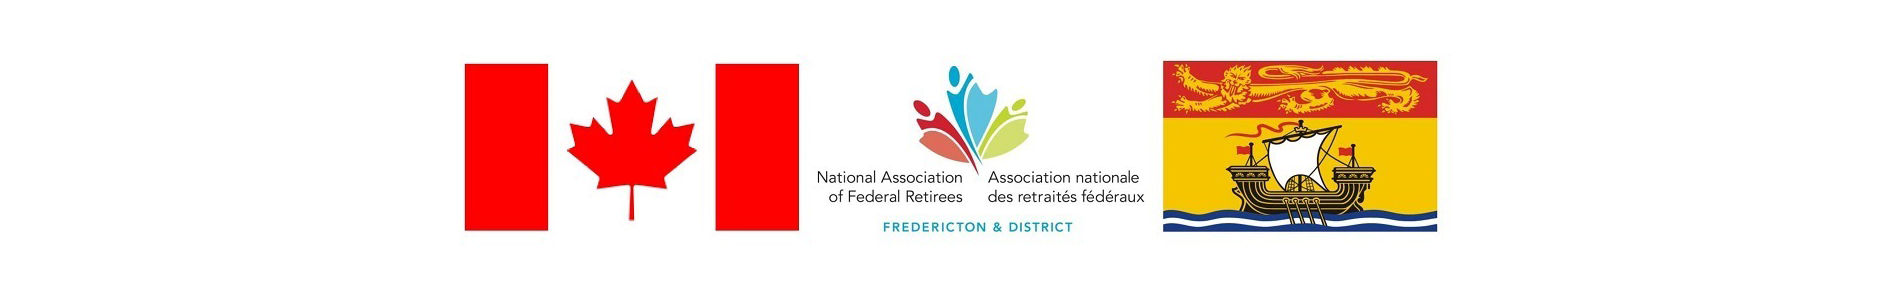 Fredericton Branch logo